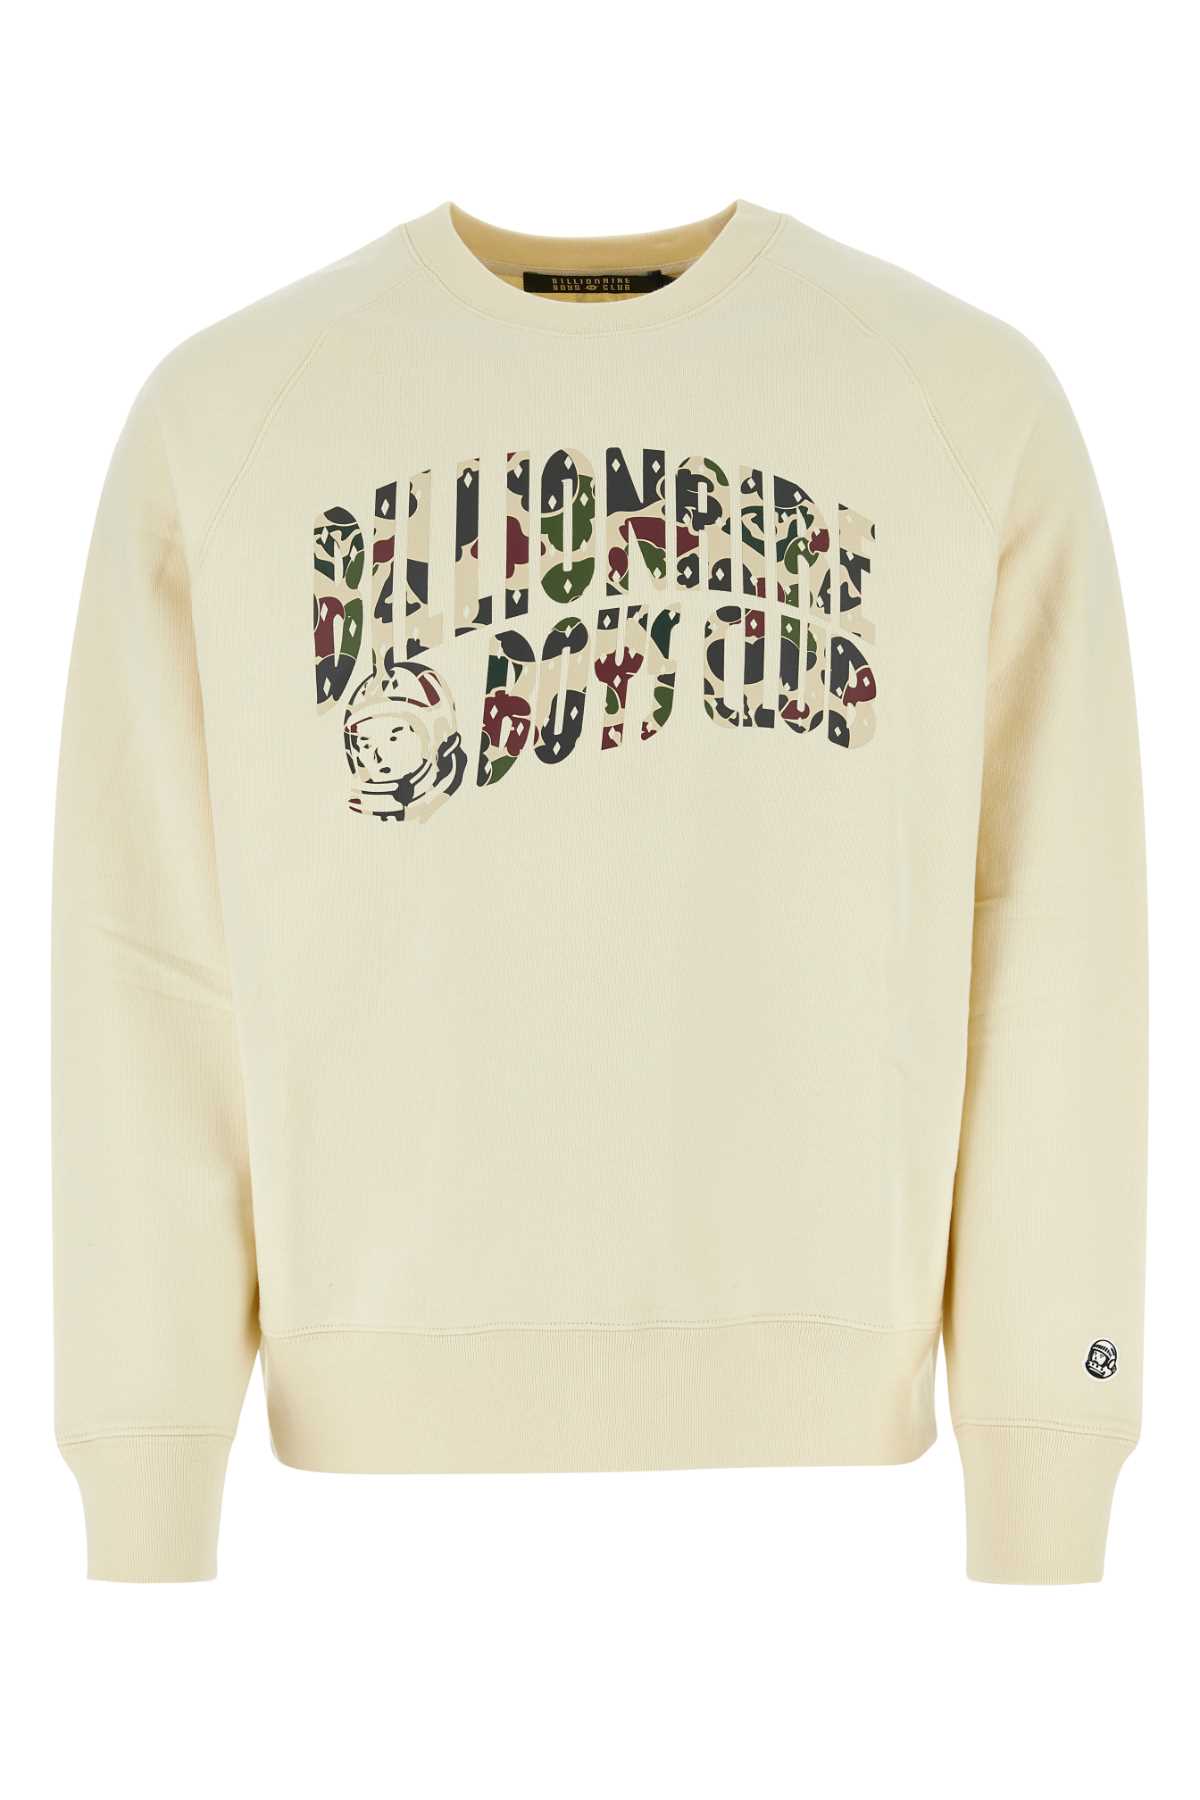 Billionaire Boys Club Ivory Cotton Sweatshirt